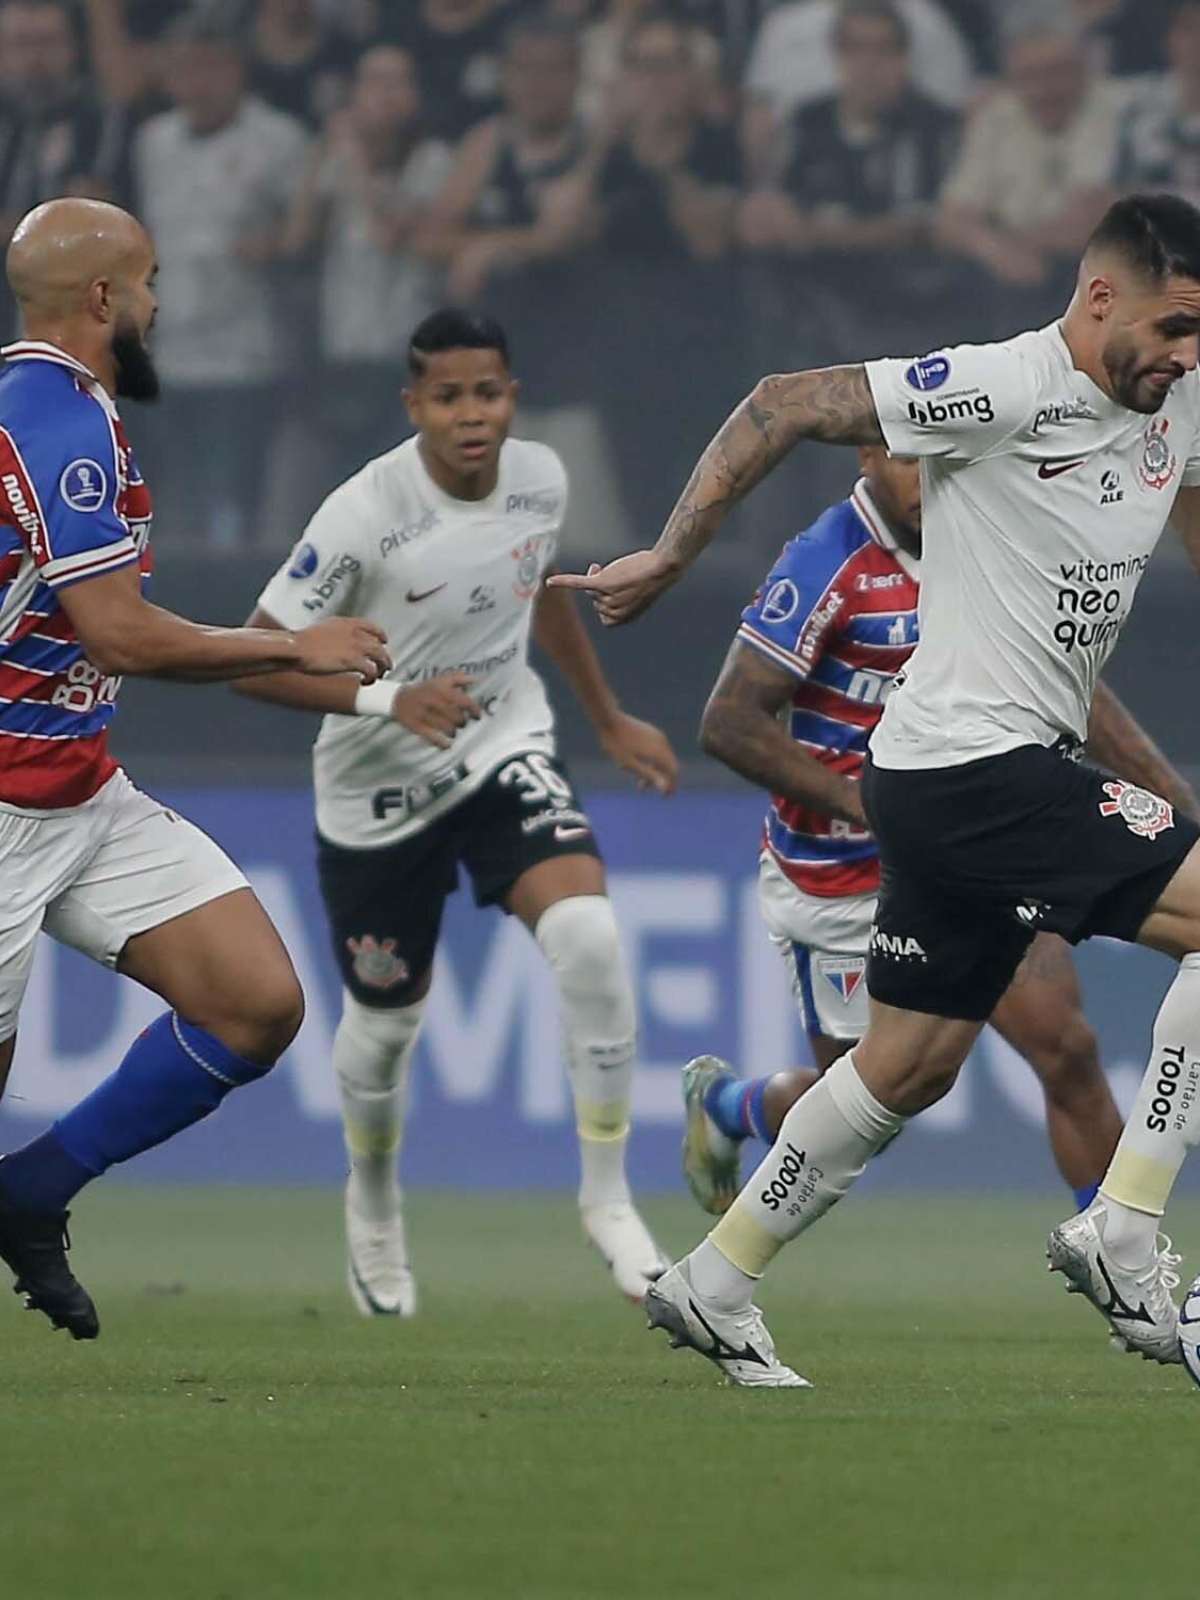 Copa Sul-Americana: como assistir Corinthians x Fortaleza online  gratuitamente